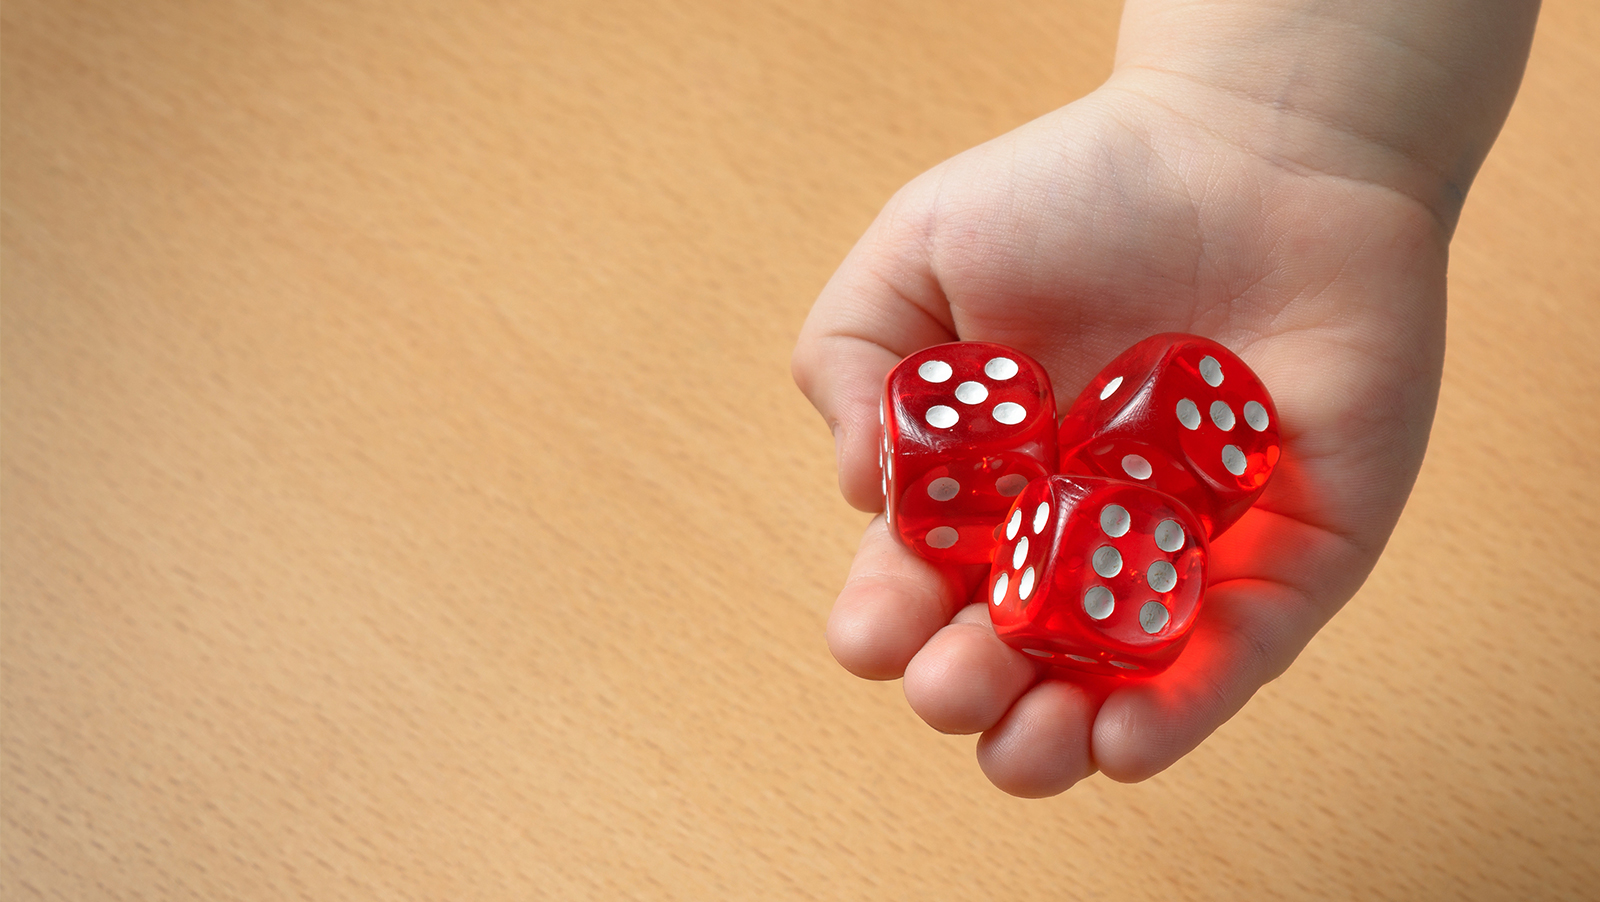 On the child gambling epidemic and fake news